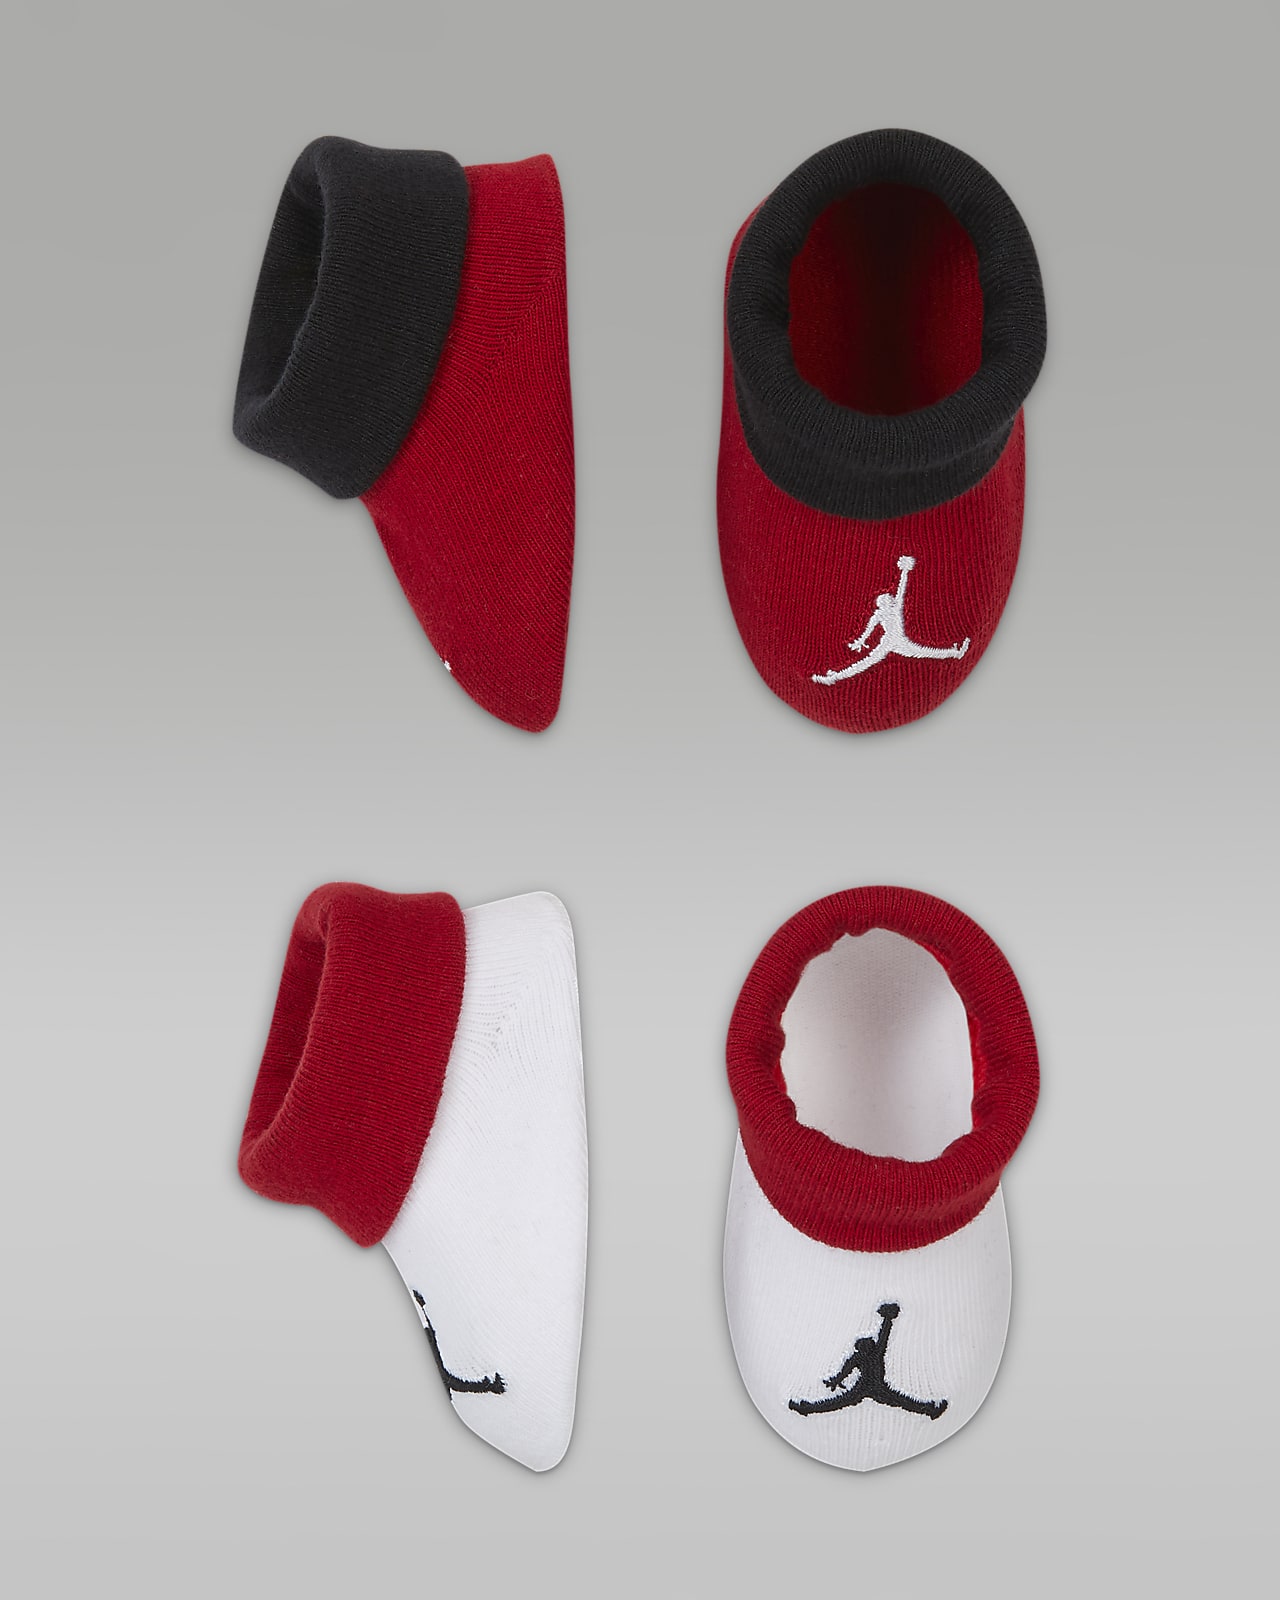 Jordan-sko til babyer (2 par)